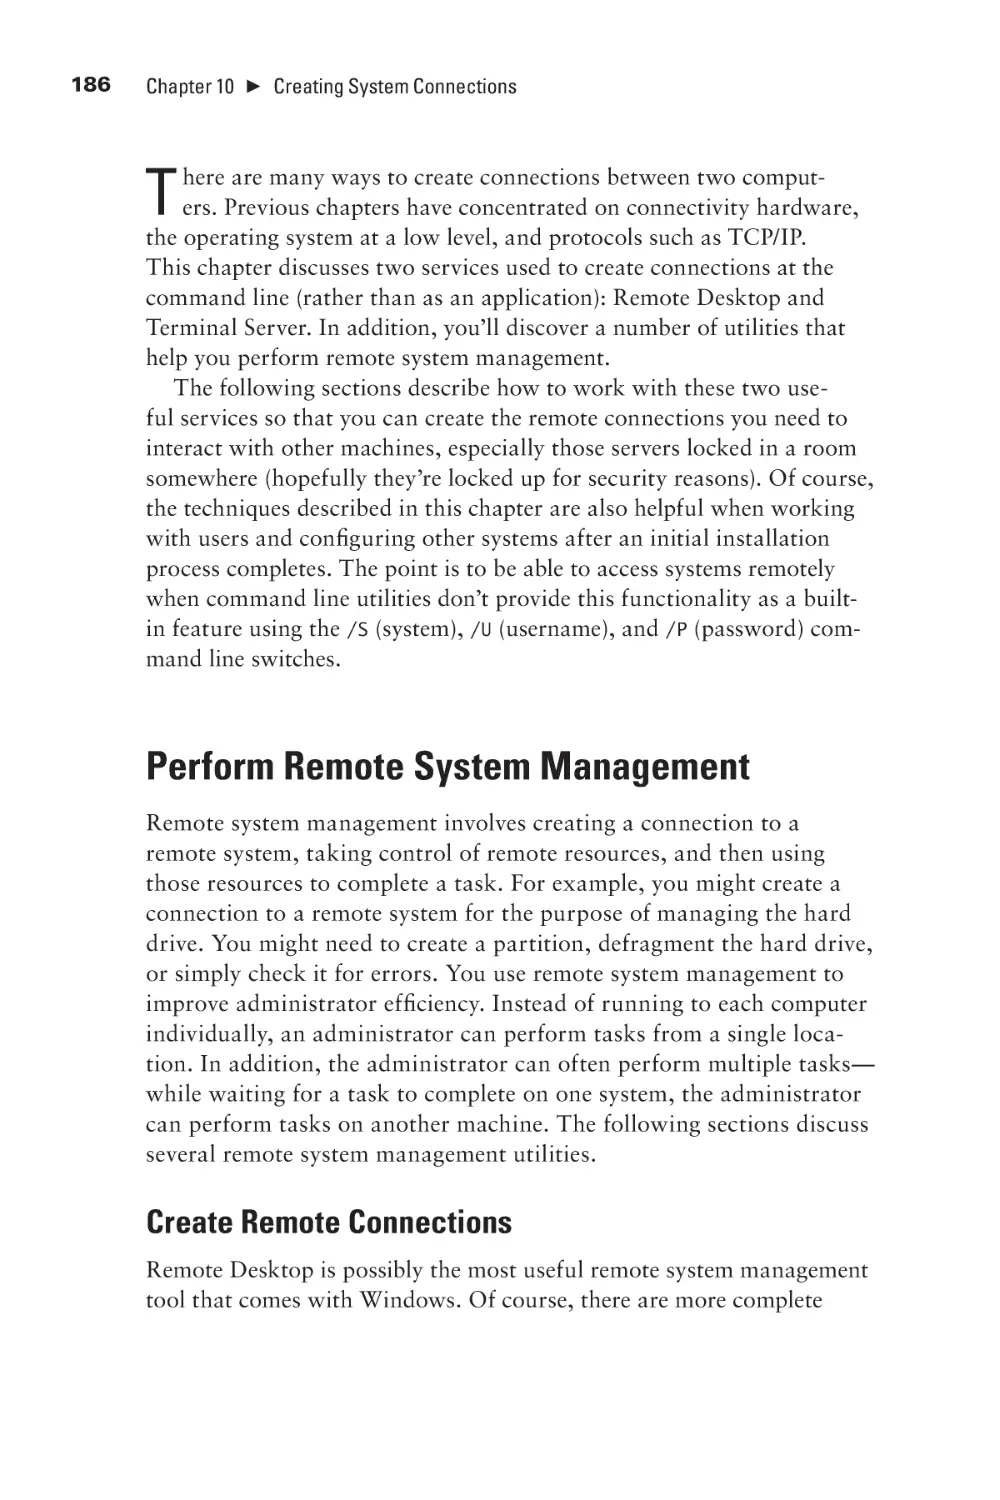 Perform Remote System Management